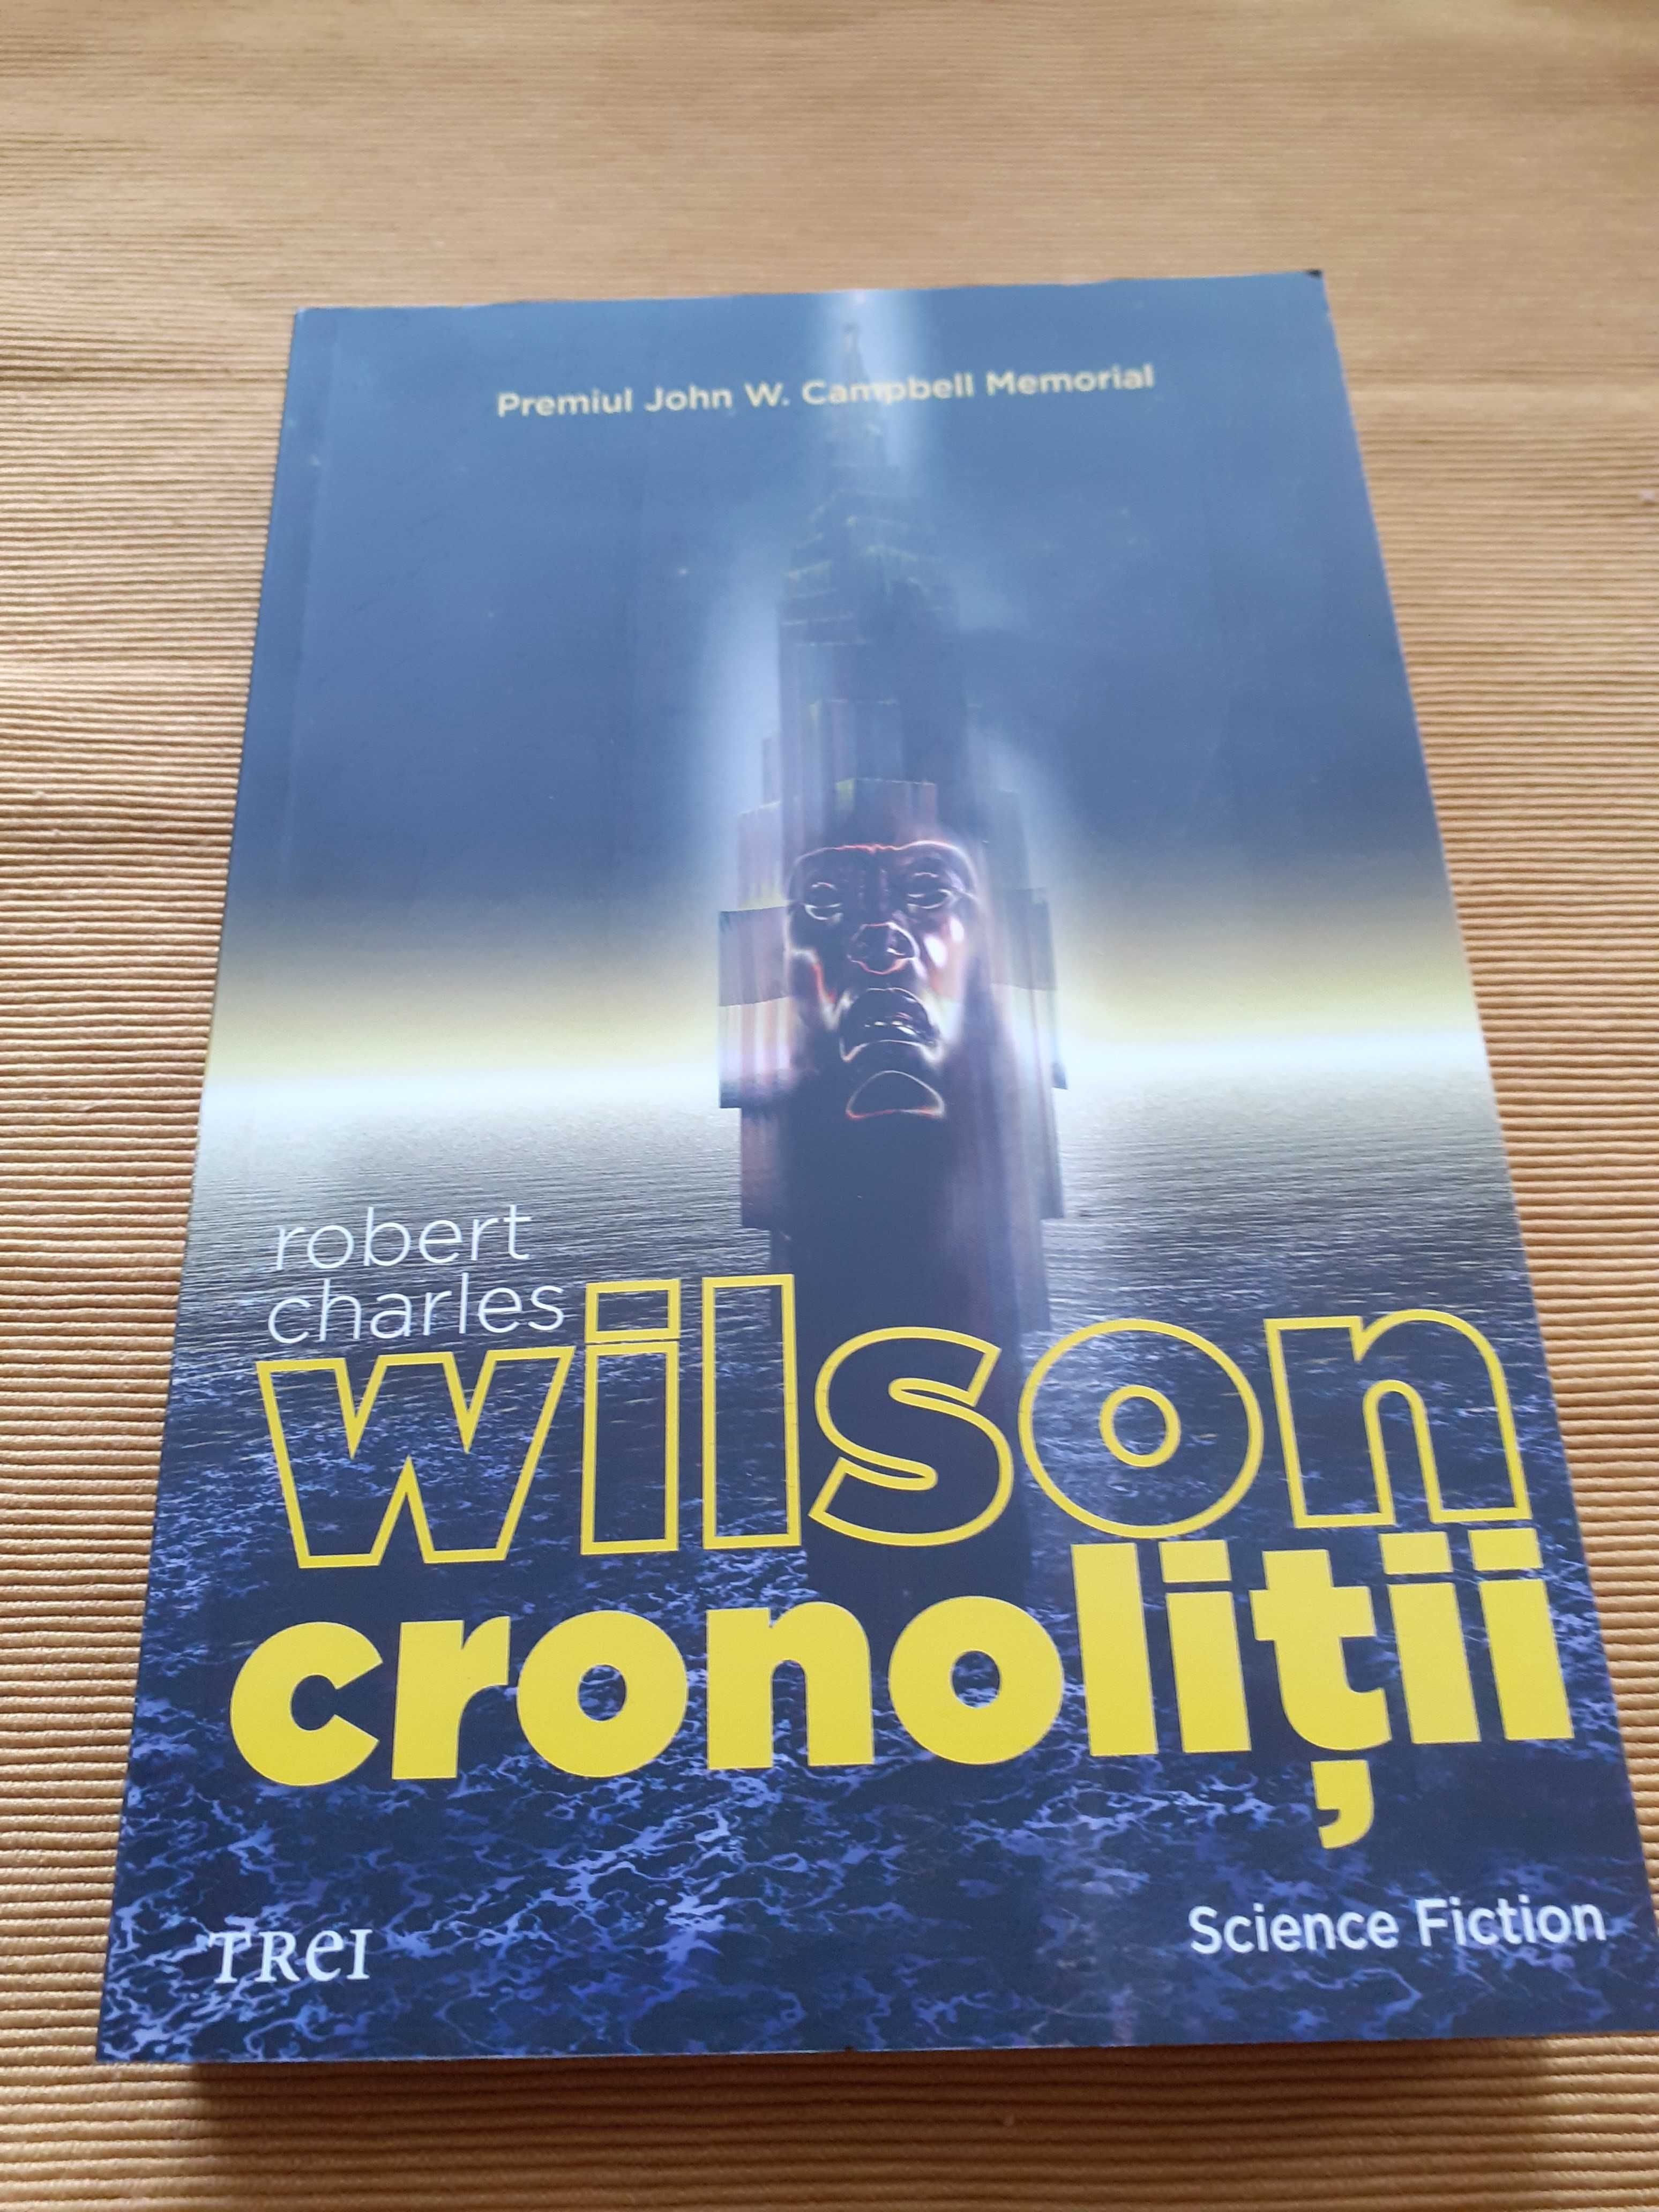 Robert Charles Wilson, Cronolitii - science fiction, ex. nou